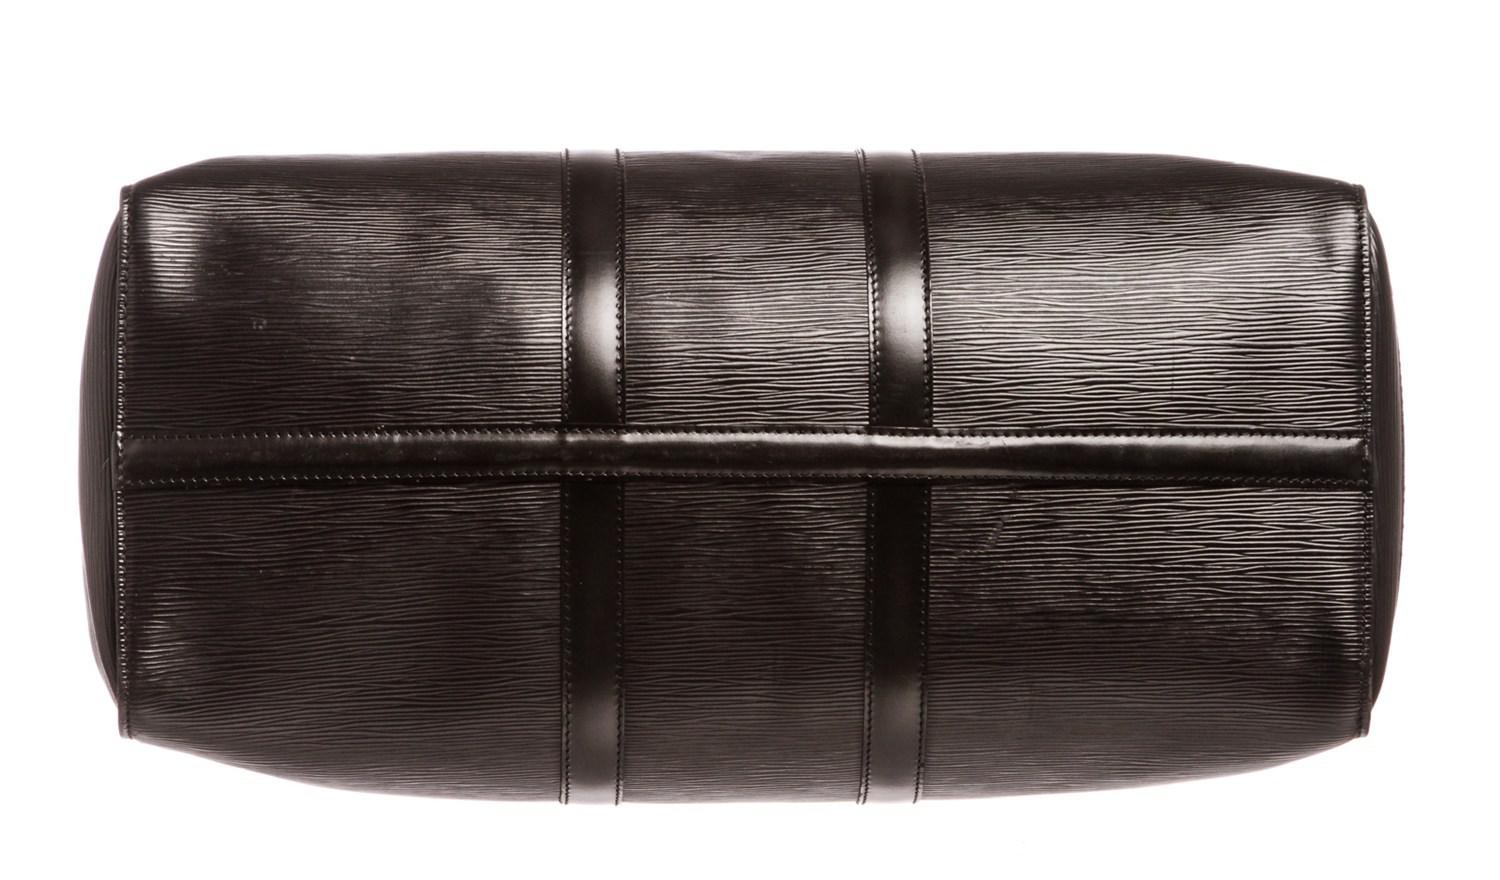 Louis Vuitton Black Epi Leather Keepall 55 Cm Duffle Bag Luggage - Lyst